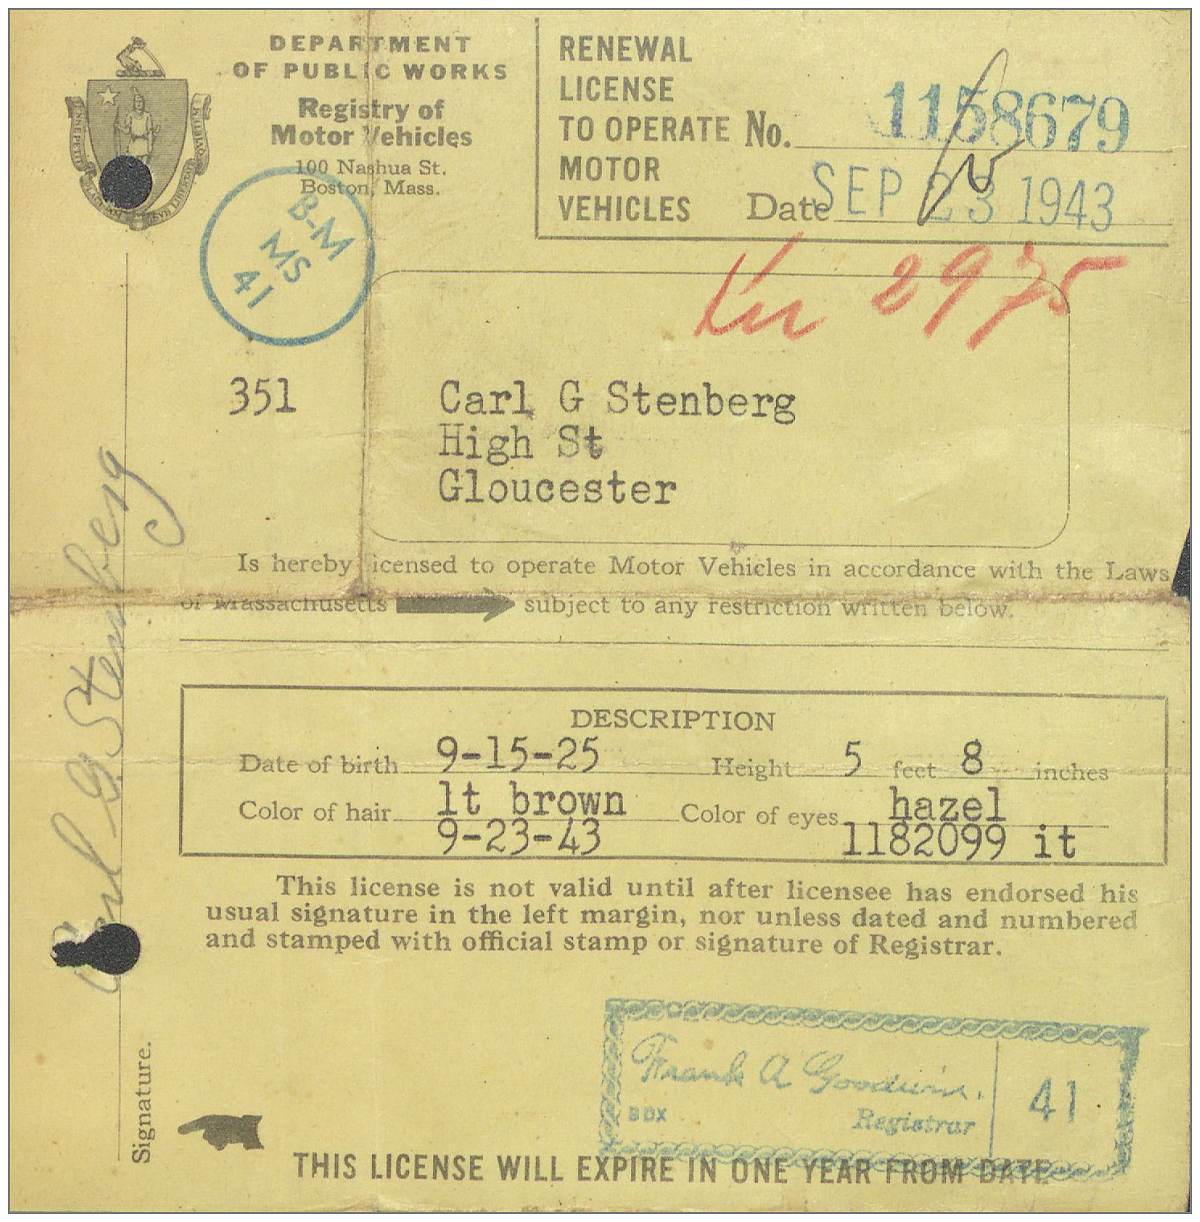 License Motor Vehicle - Carl G. Stenberg - via KU 2975